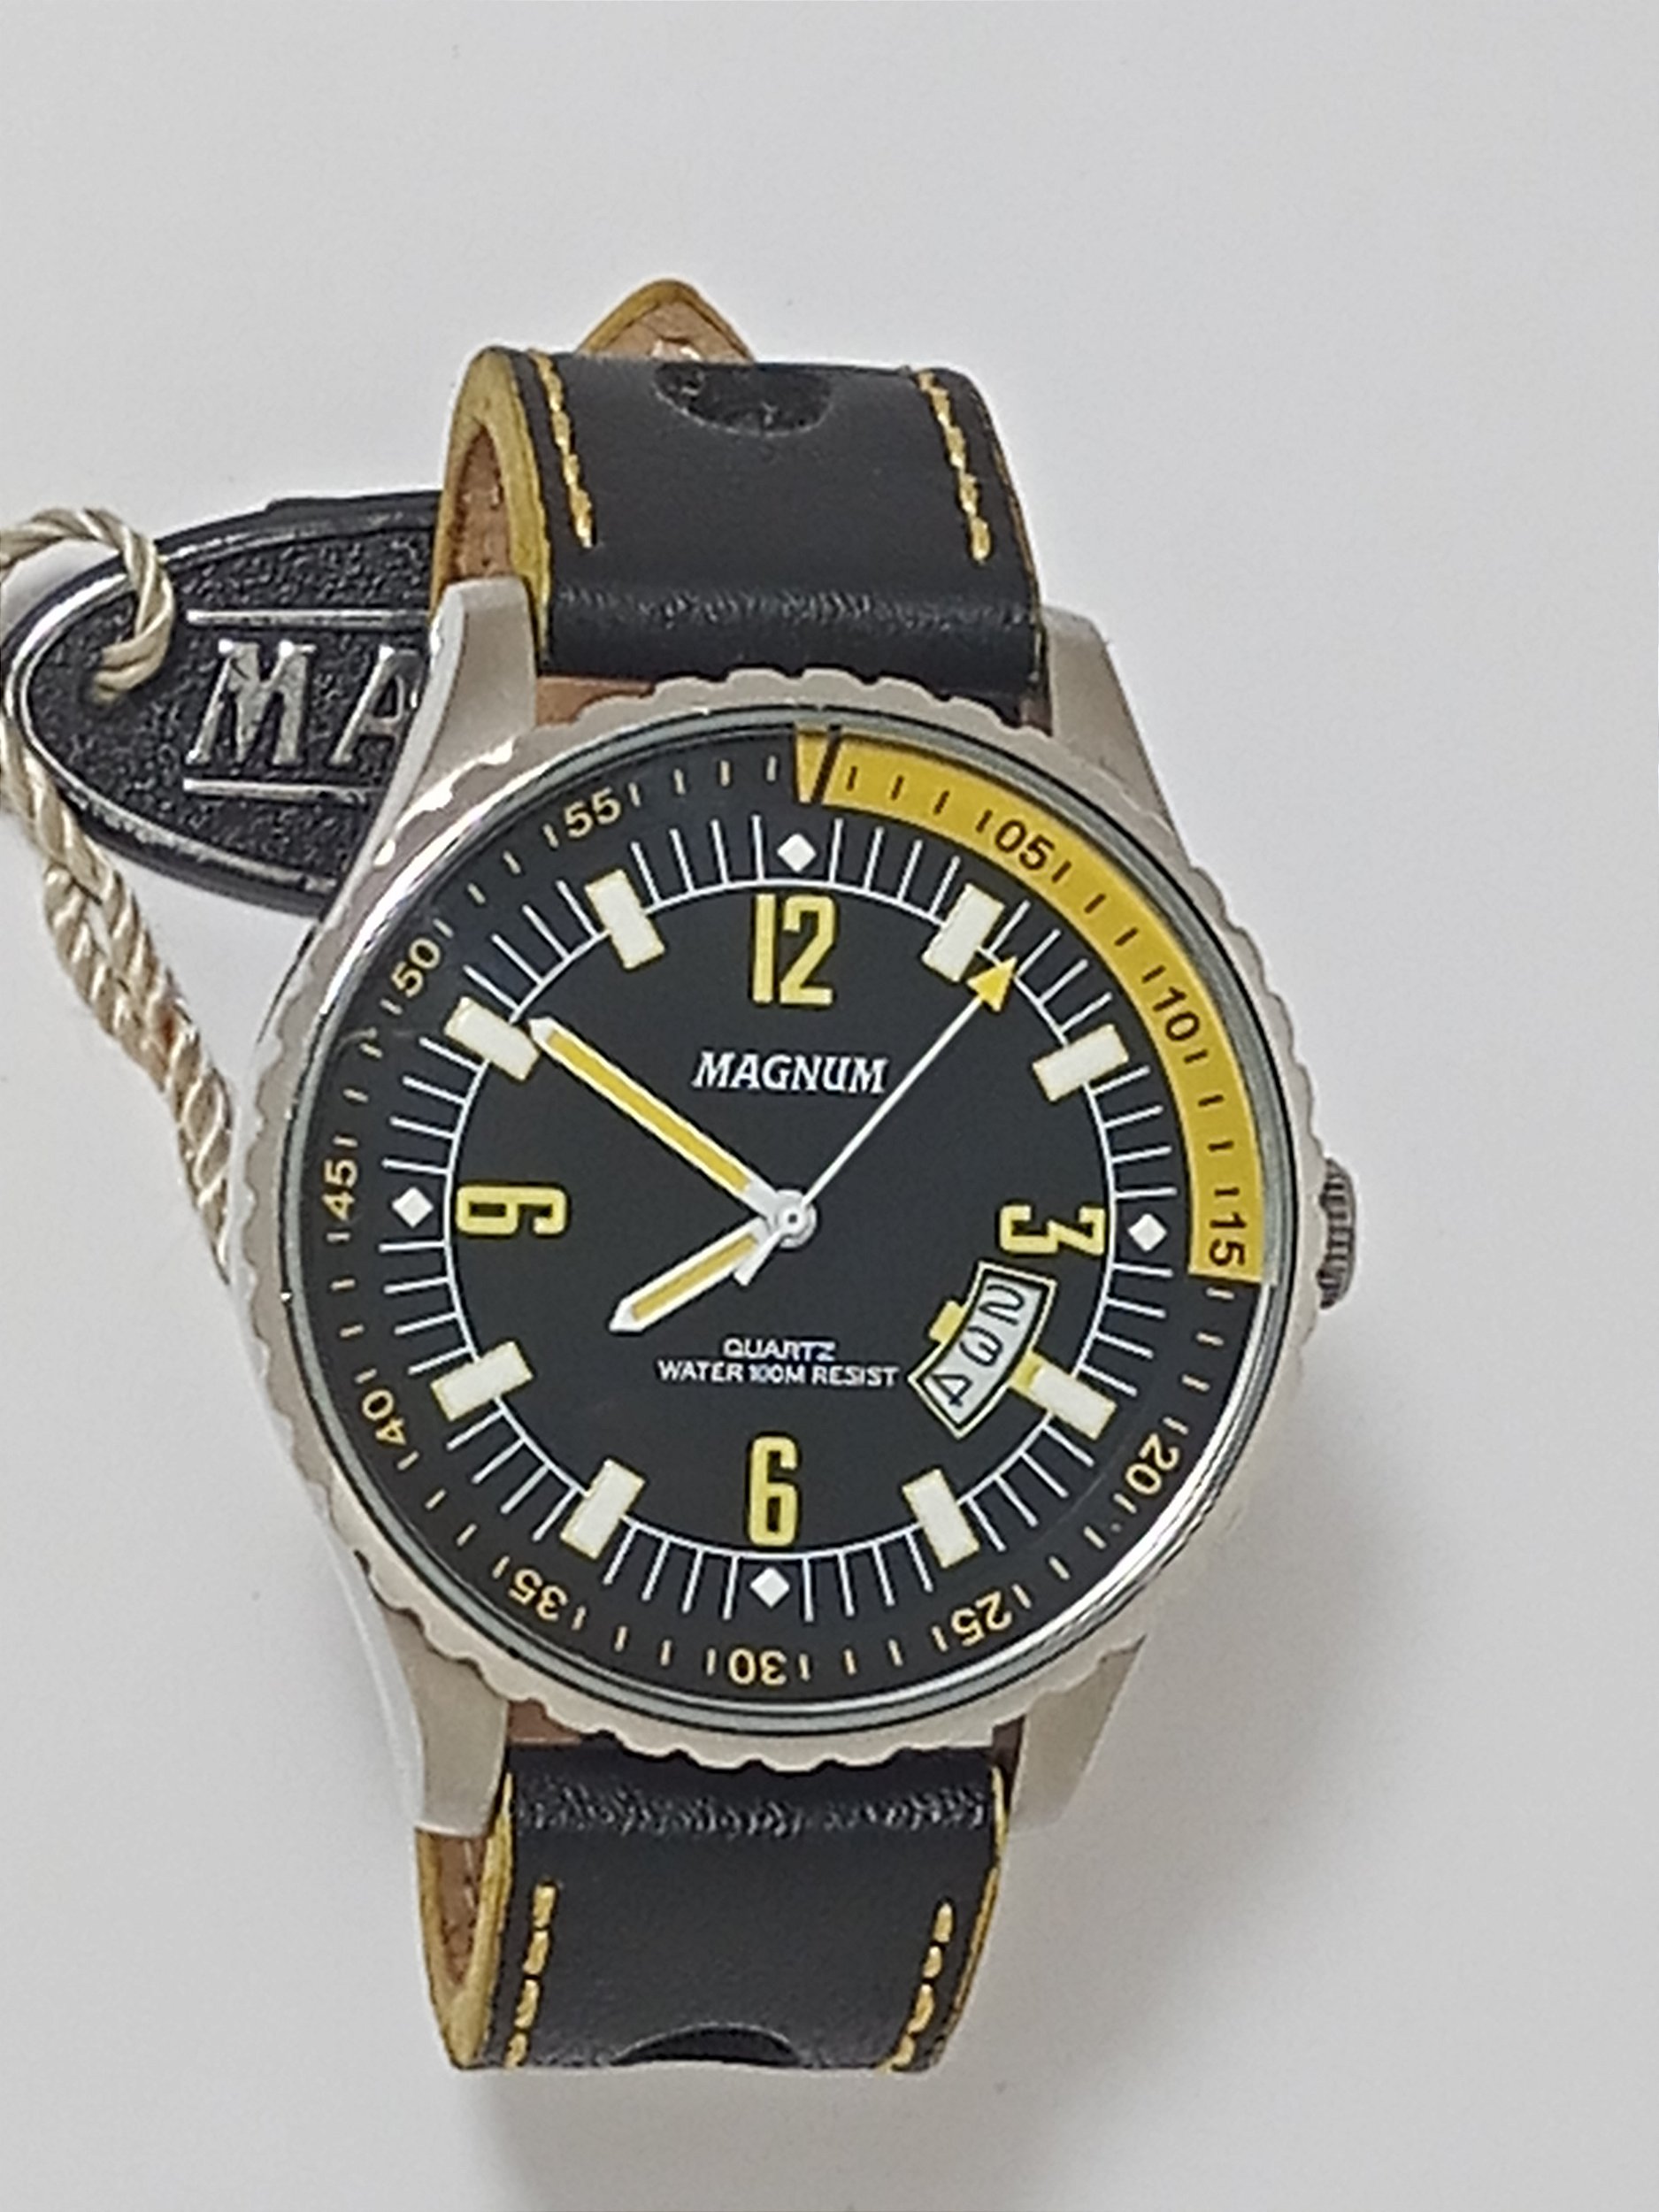 Relógio Magnum Racing Masculino MA33746P - RelojoariaJJ